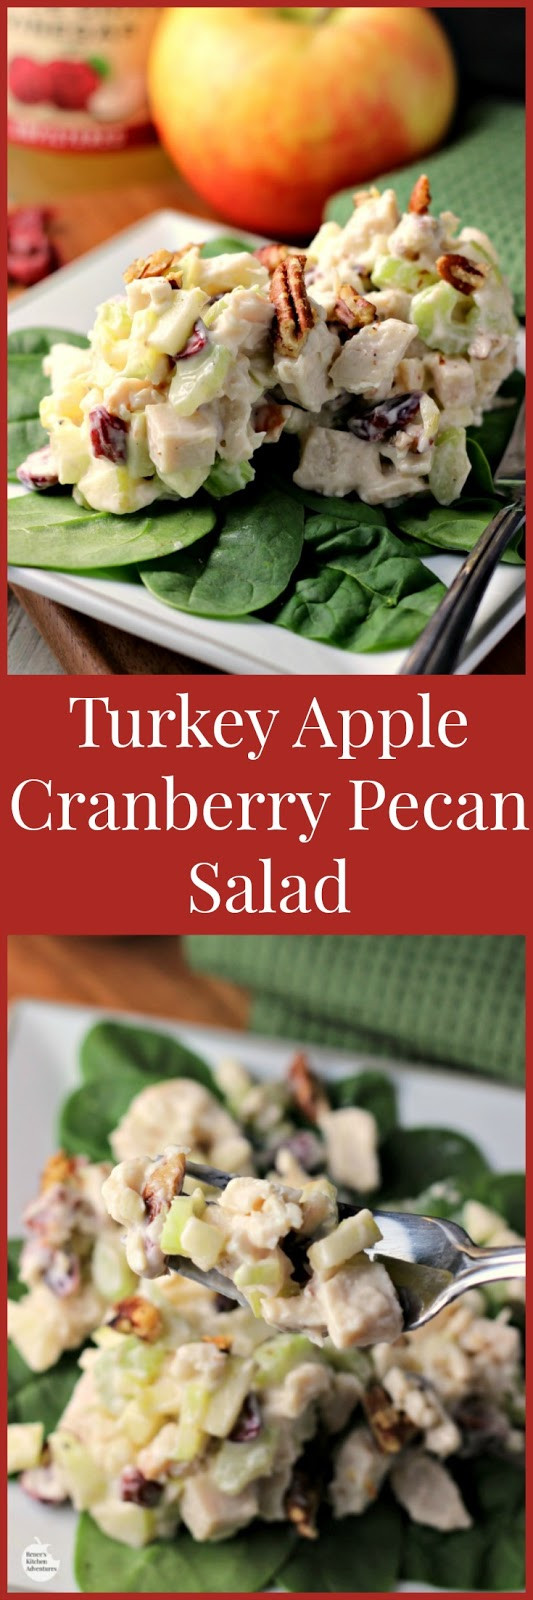 Turkey Cranberry Salad
 Turkey Apple Cranberry Pecan Salad